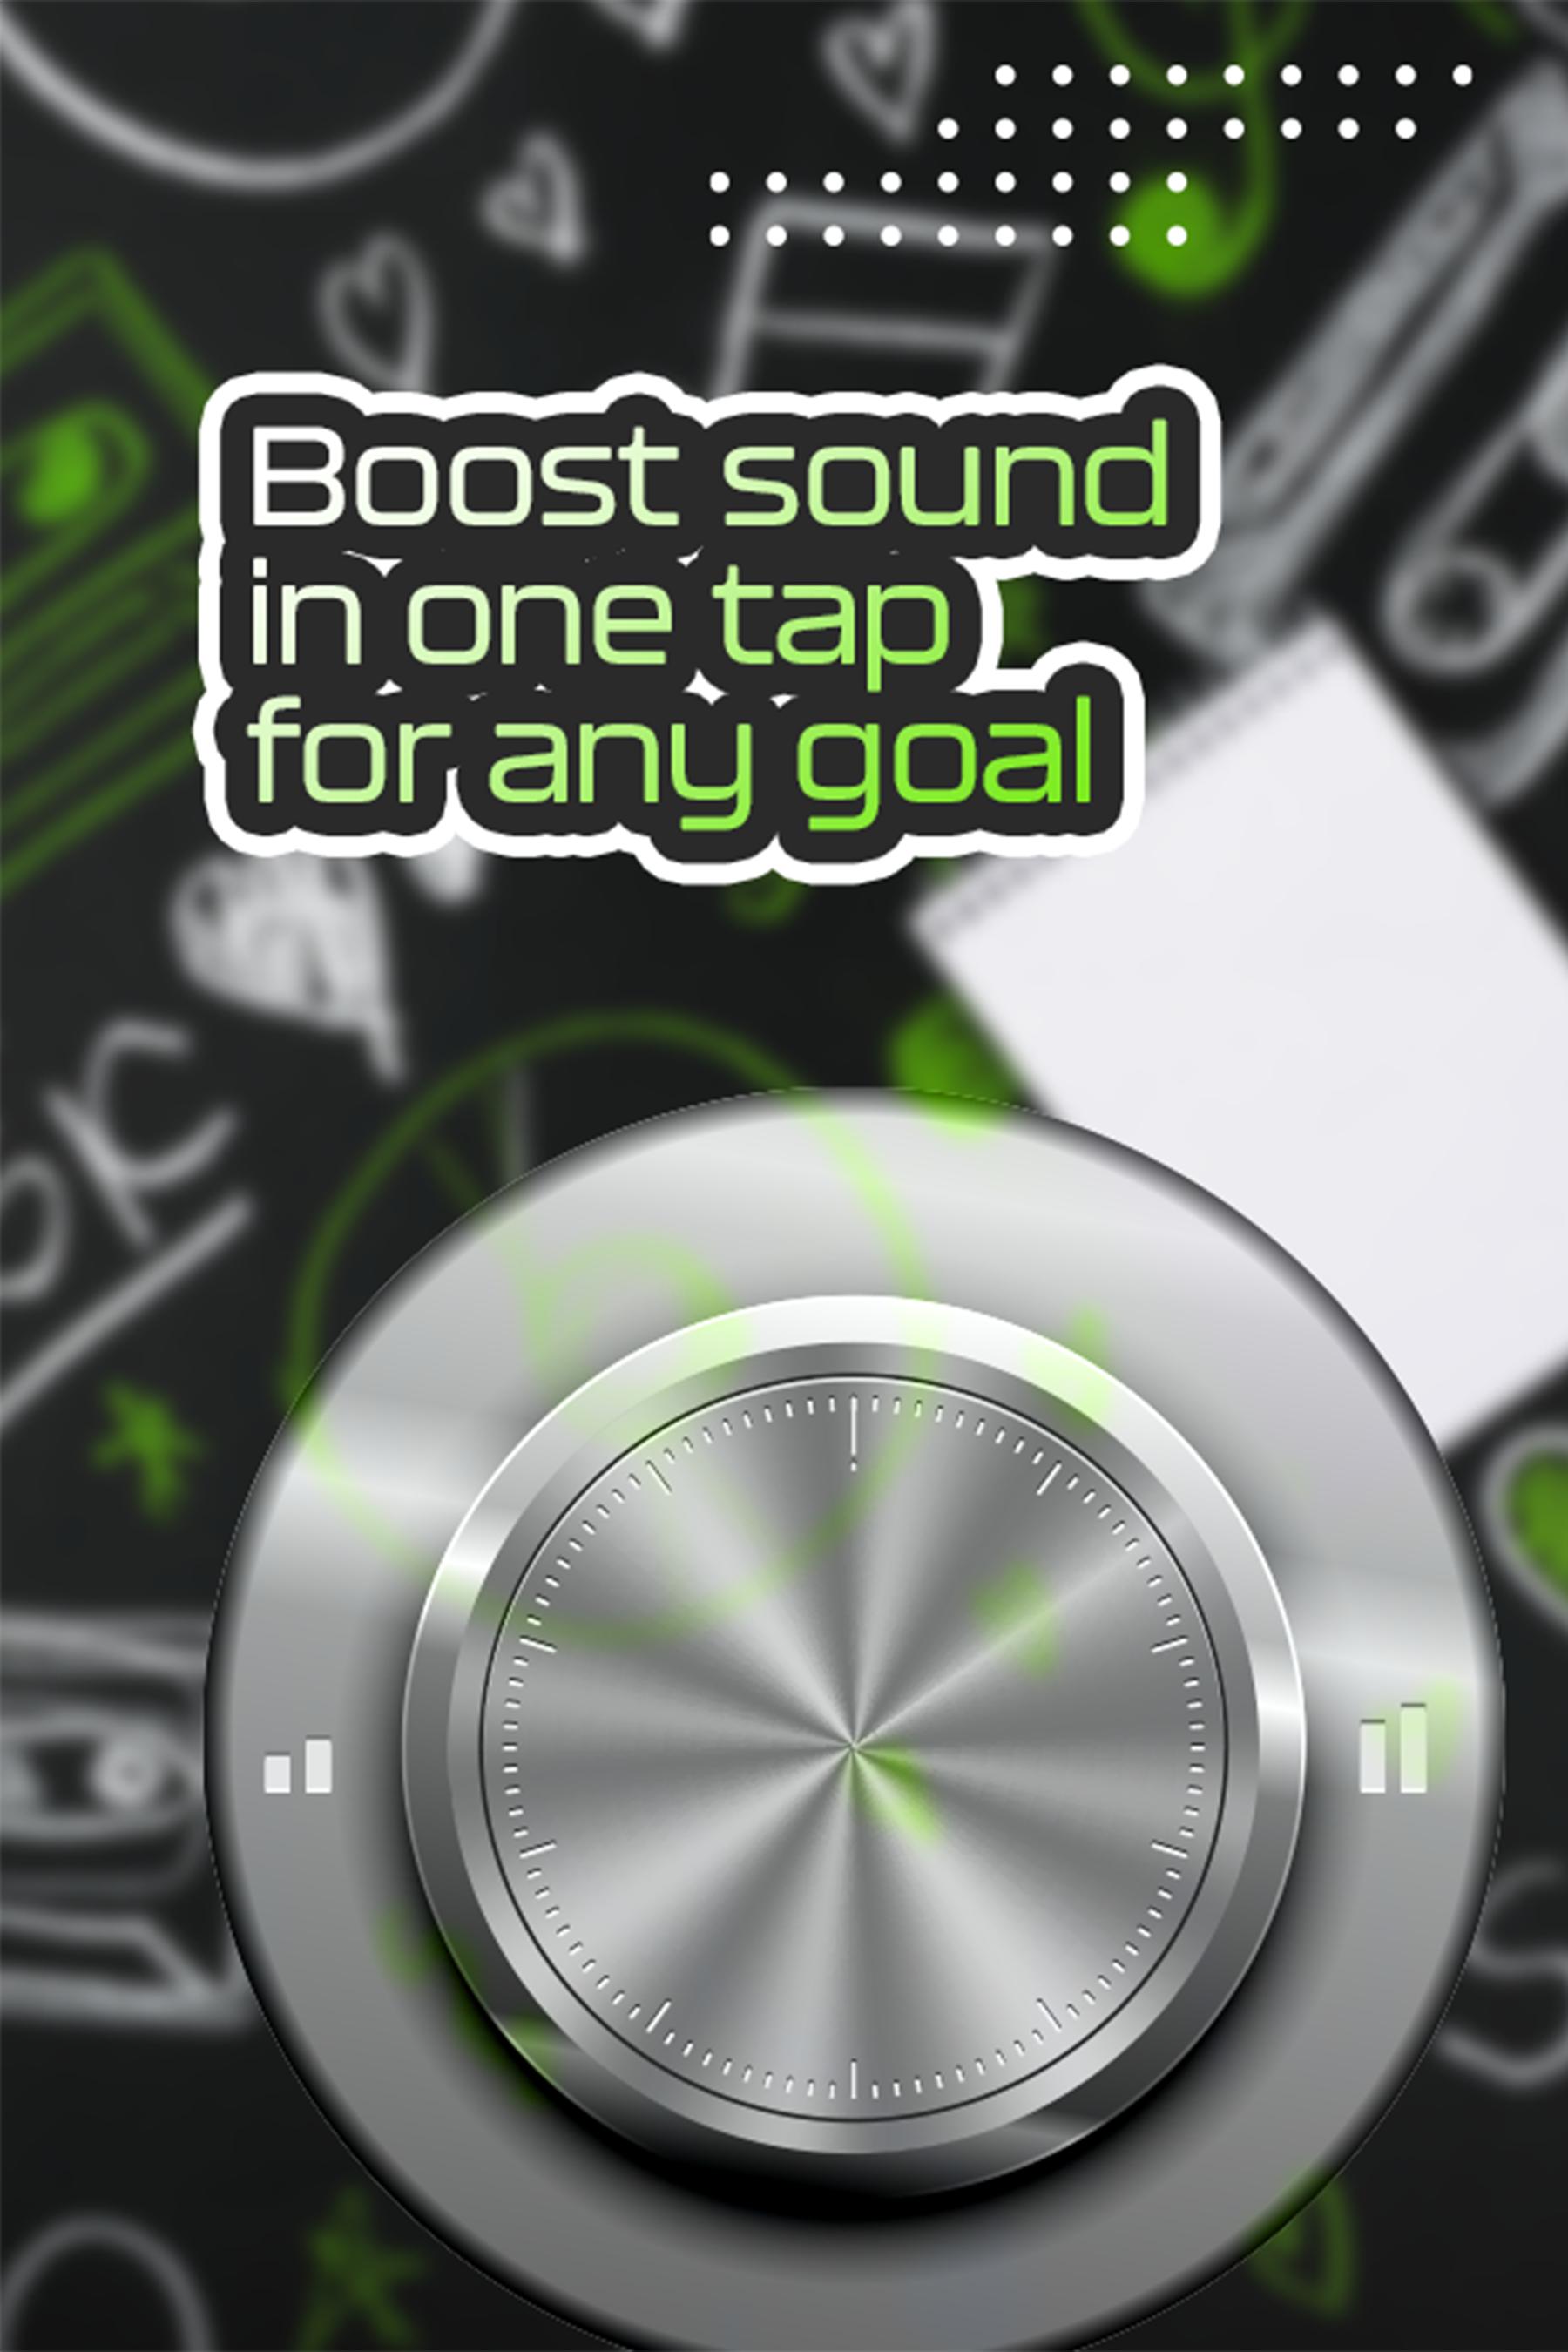 Bass Booster amp; Music Equalizer 2.0 Screenshot 14